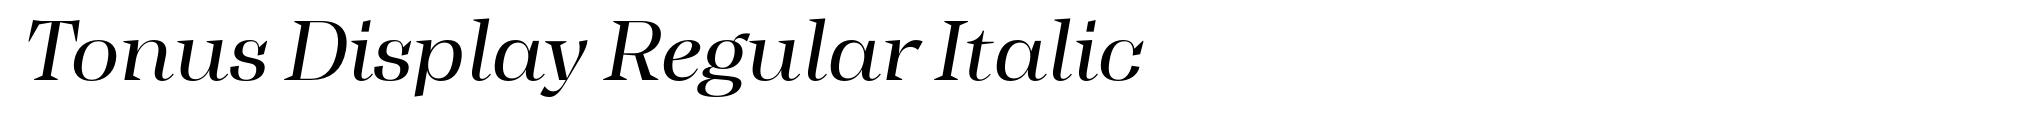 Tonus Display Regular Italic image